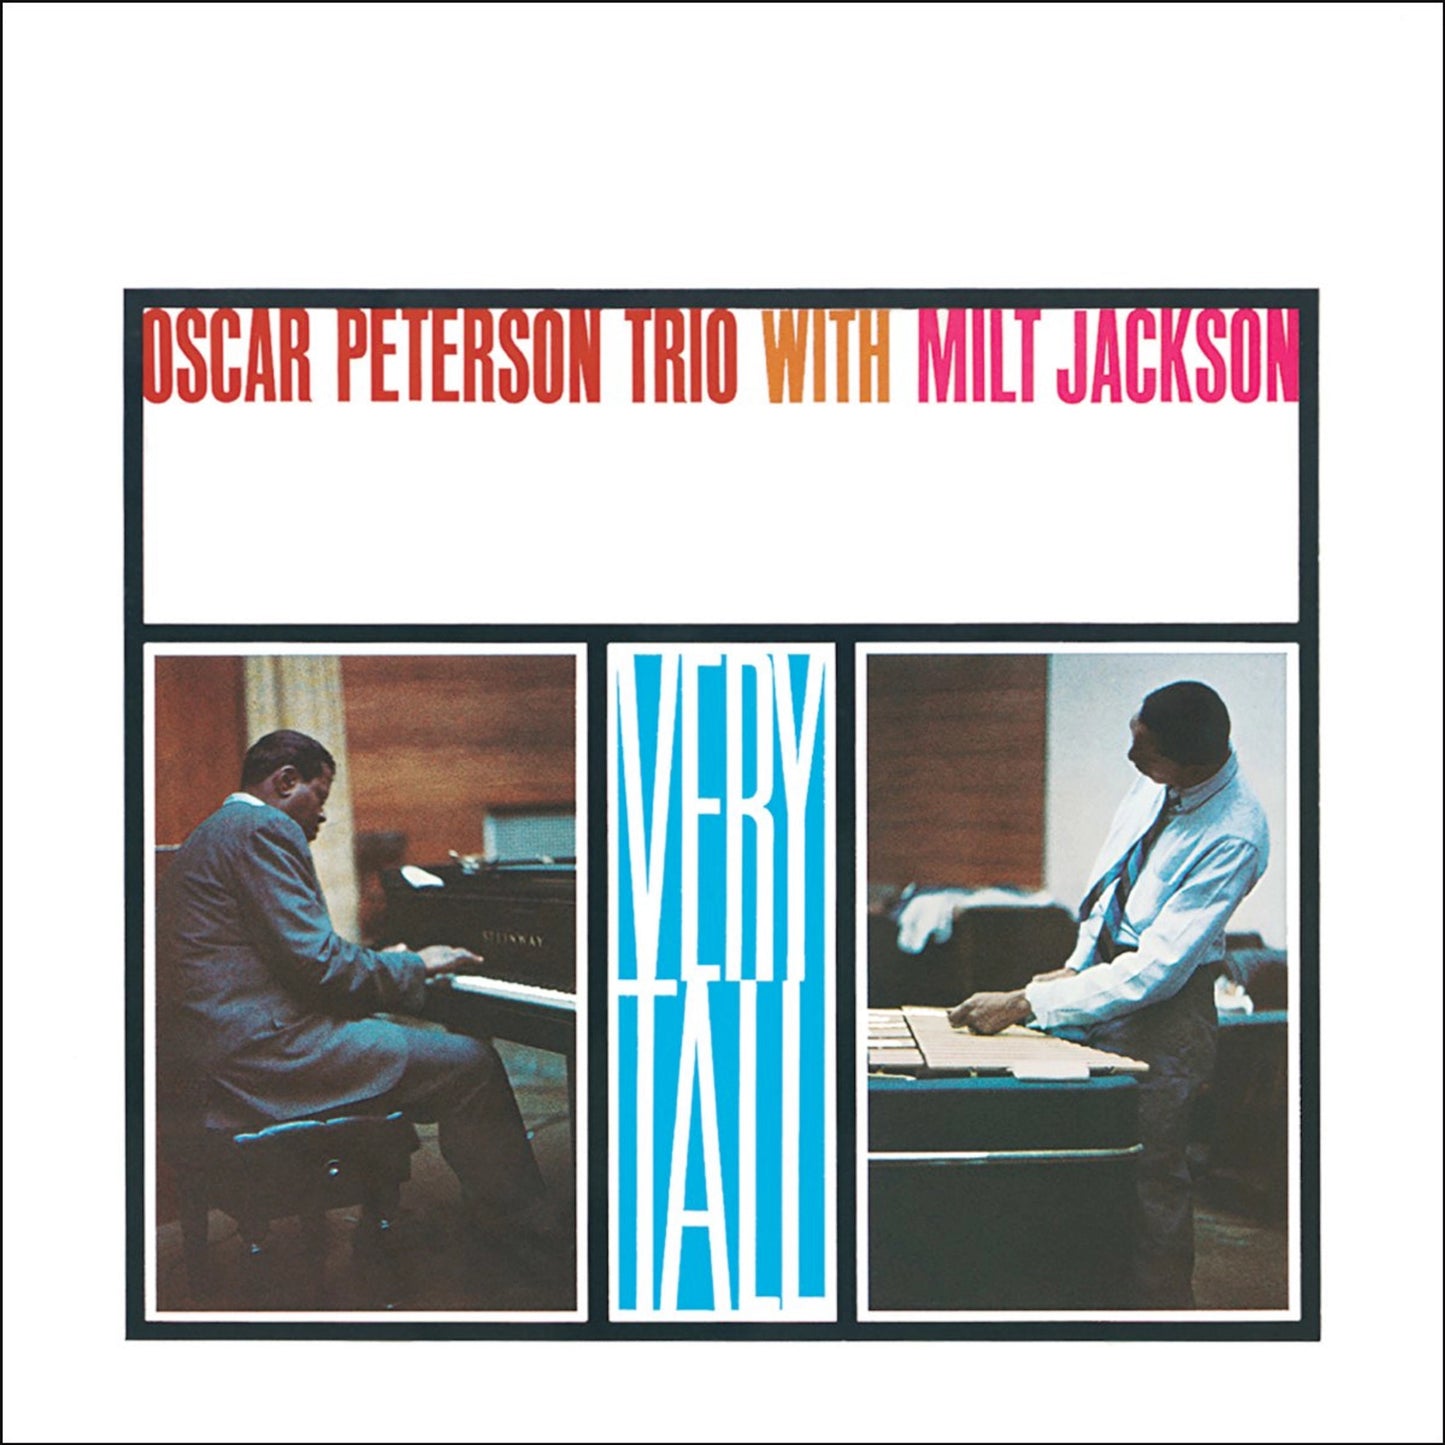 Oscar Peterson Trio with Milt Jackson - Very Tall - Verve Series LP